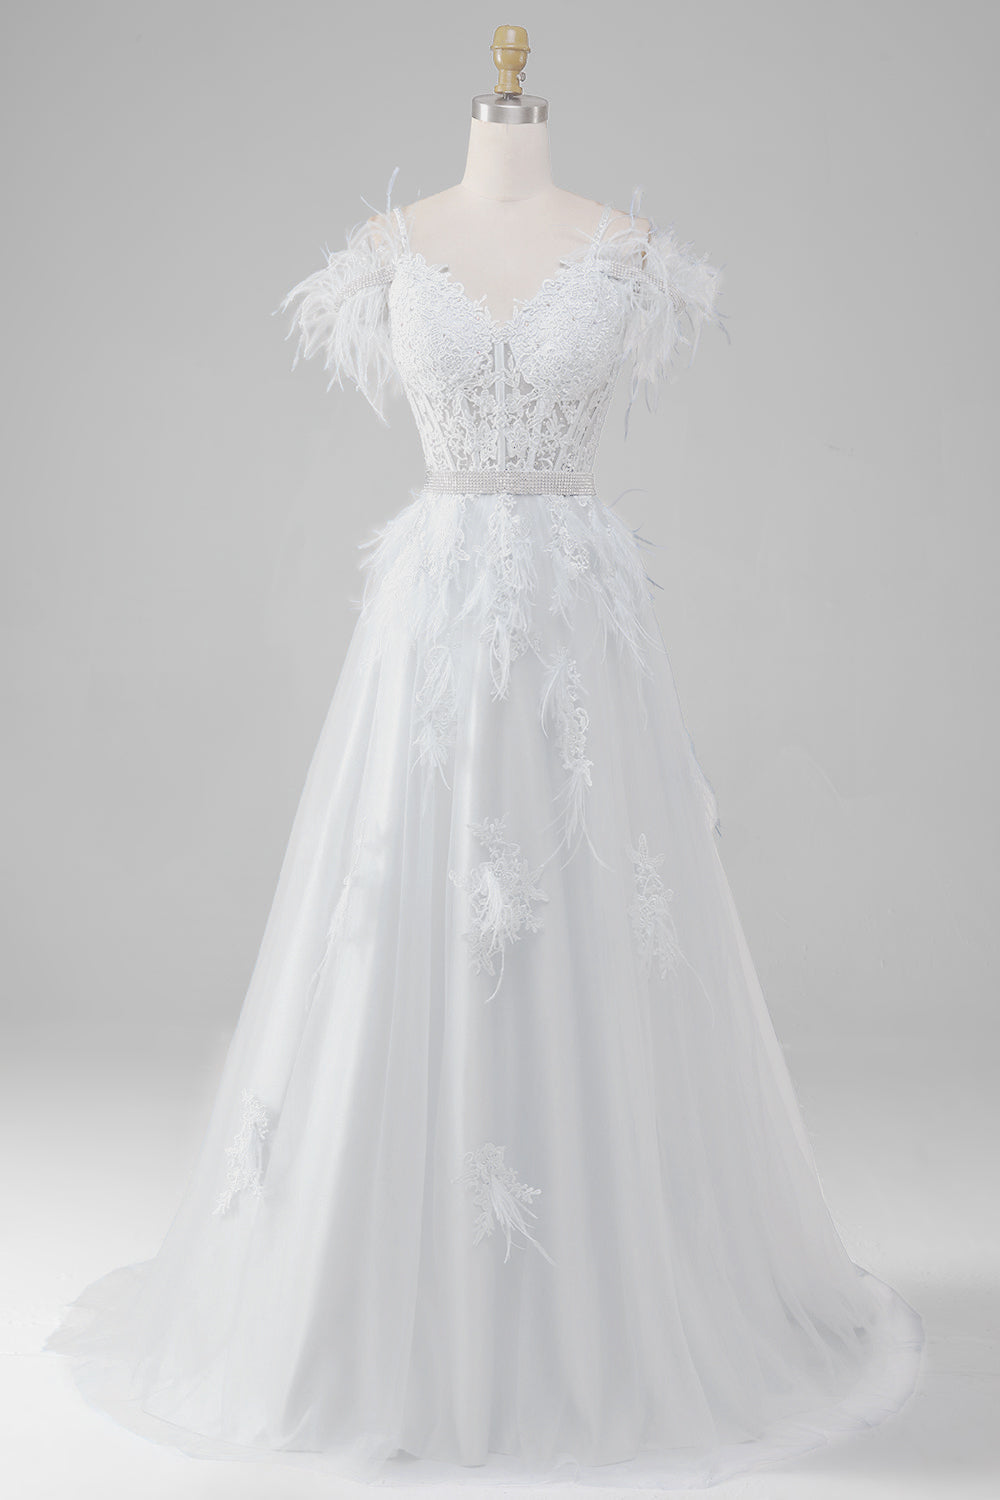 Strass Accents Corset blanc robe de mariée avec Appliques